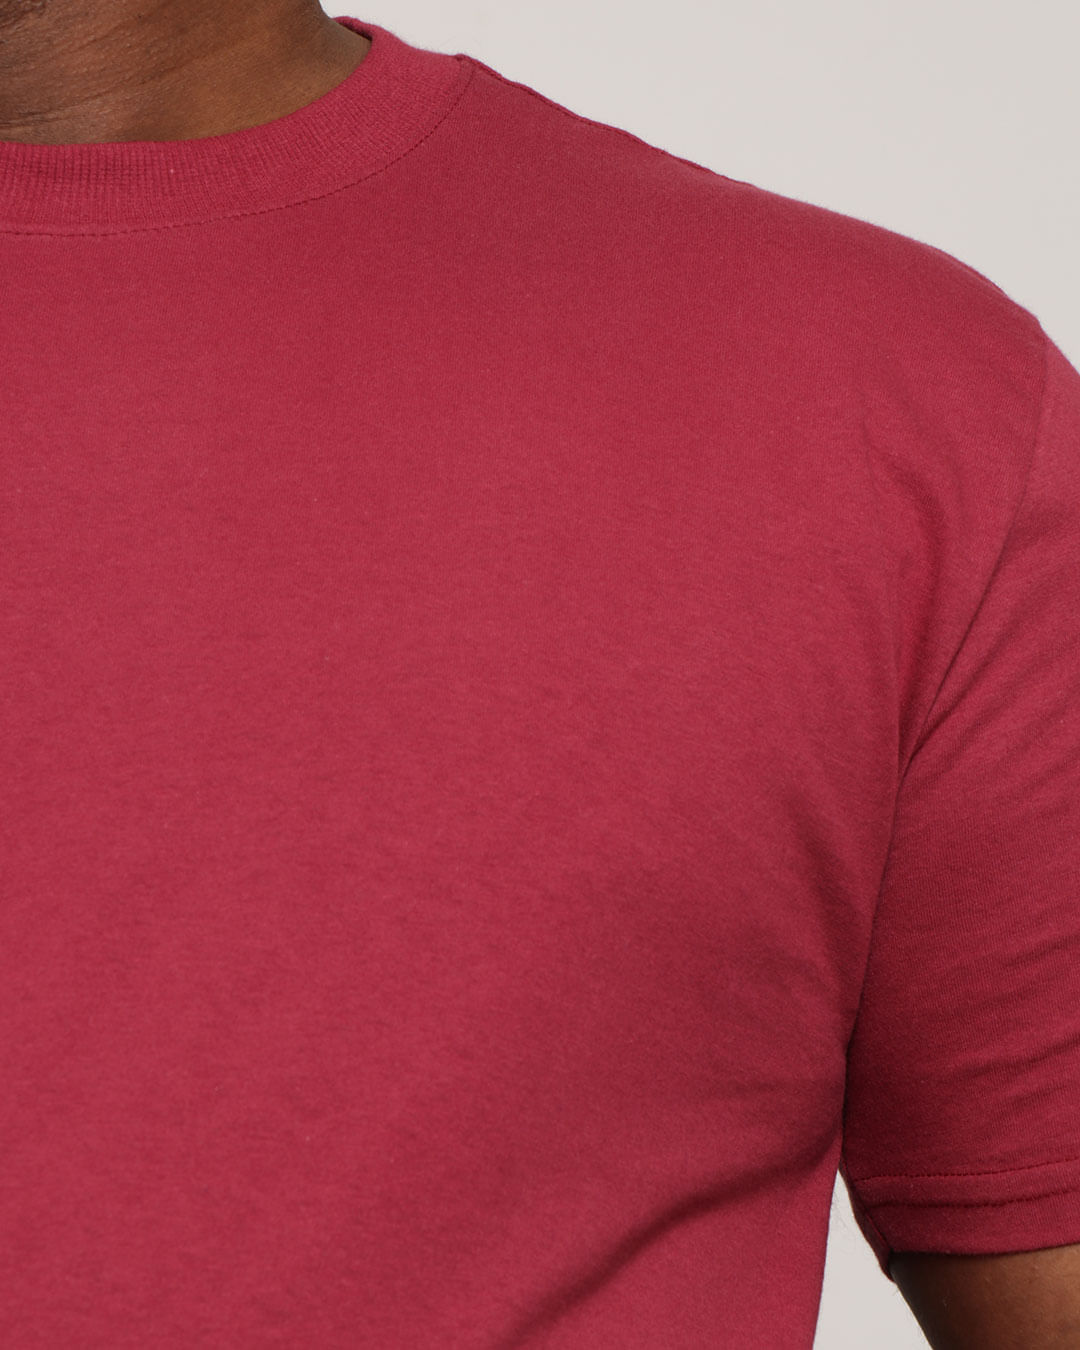 Camiseta-Plus-Size-Masculina-Estampa-Nas-Costas-Manga-Curta-Vermelha